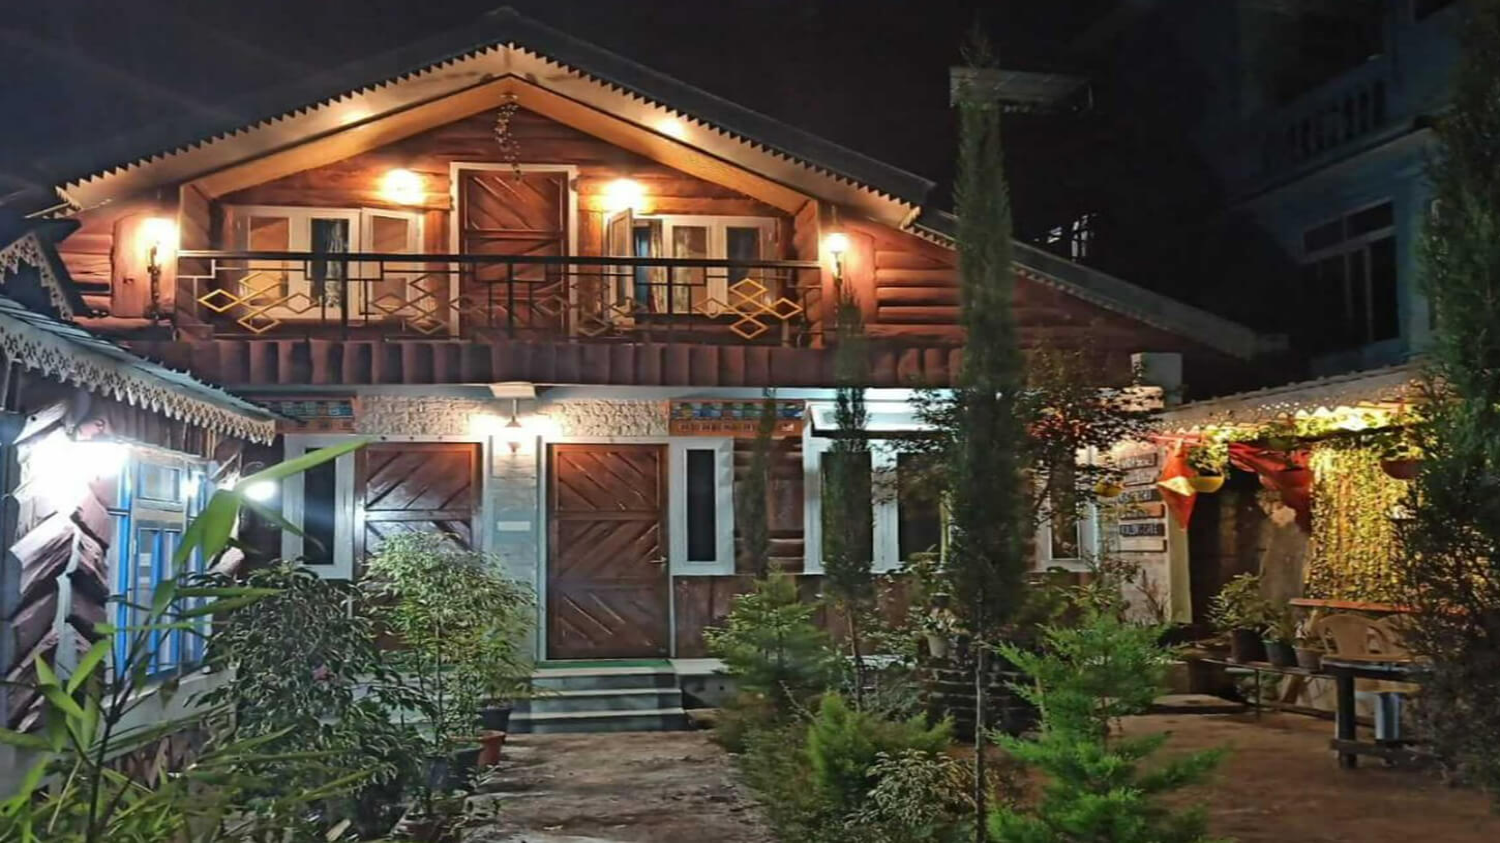 Aama's Homestay, Mangan, Sikkim, India